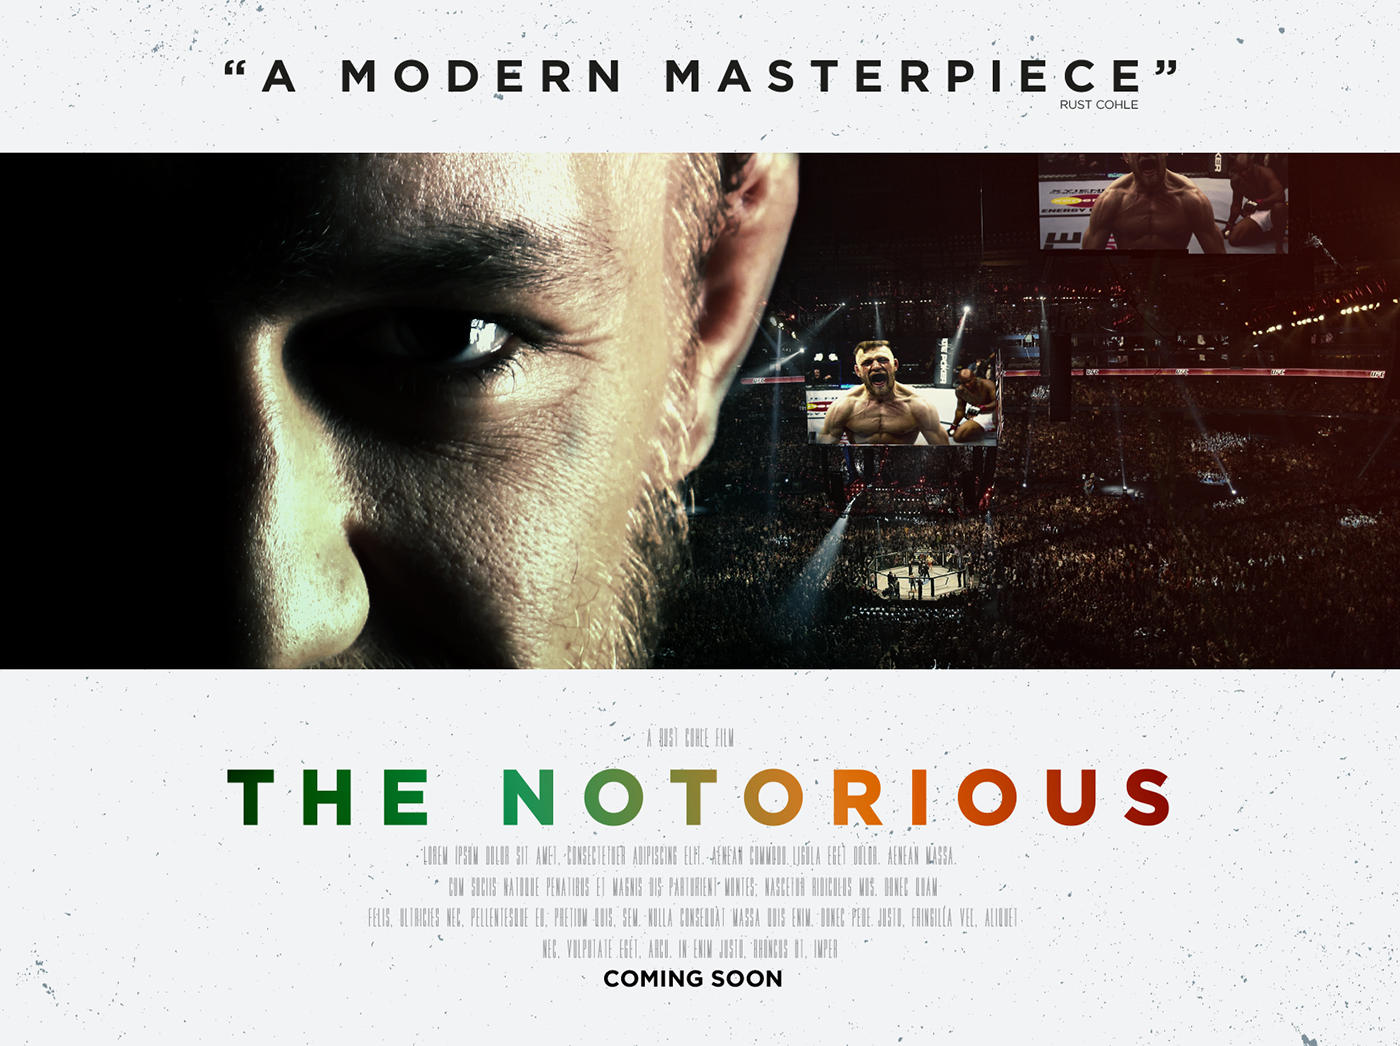 thenotorious movie Conor McGregor Cinema poster quad poster MMA UFC Eire Ireland Rome MD D'Aleo conor